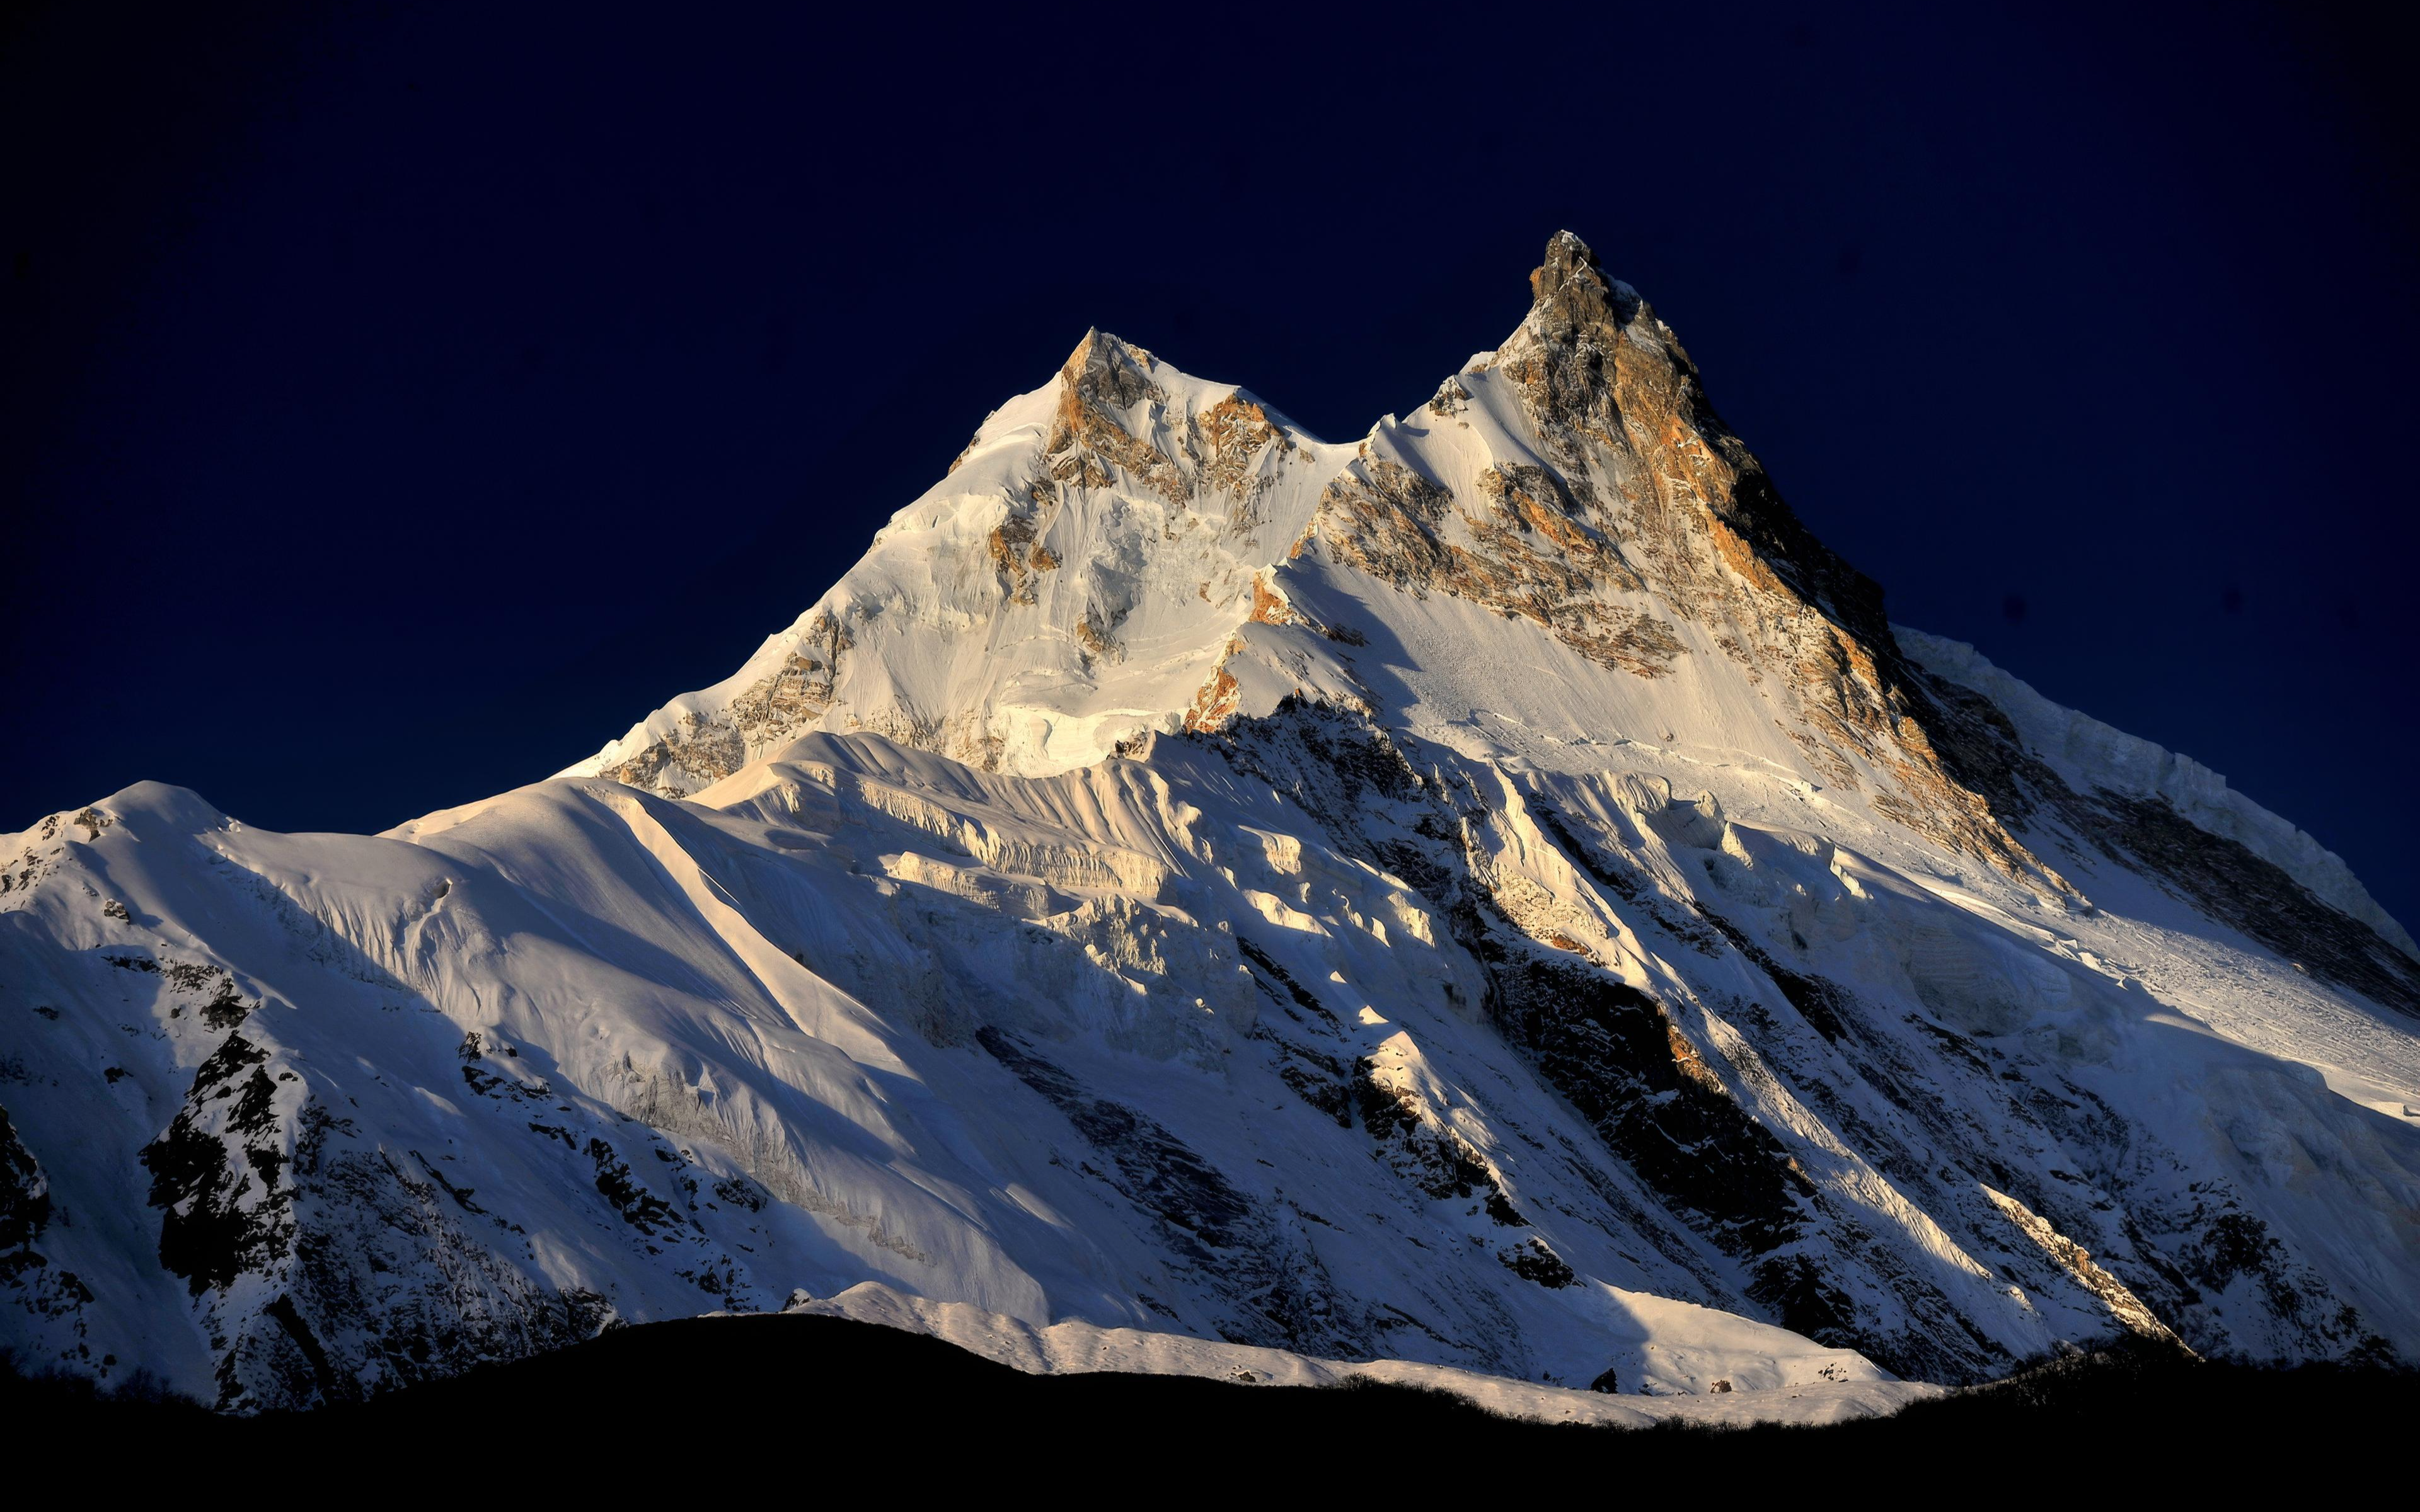 General 3840x2400 nature landscape mountains sunlight rocks snow Manaslu Nepal